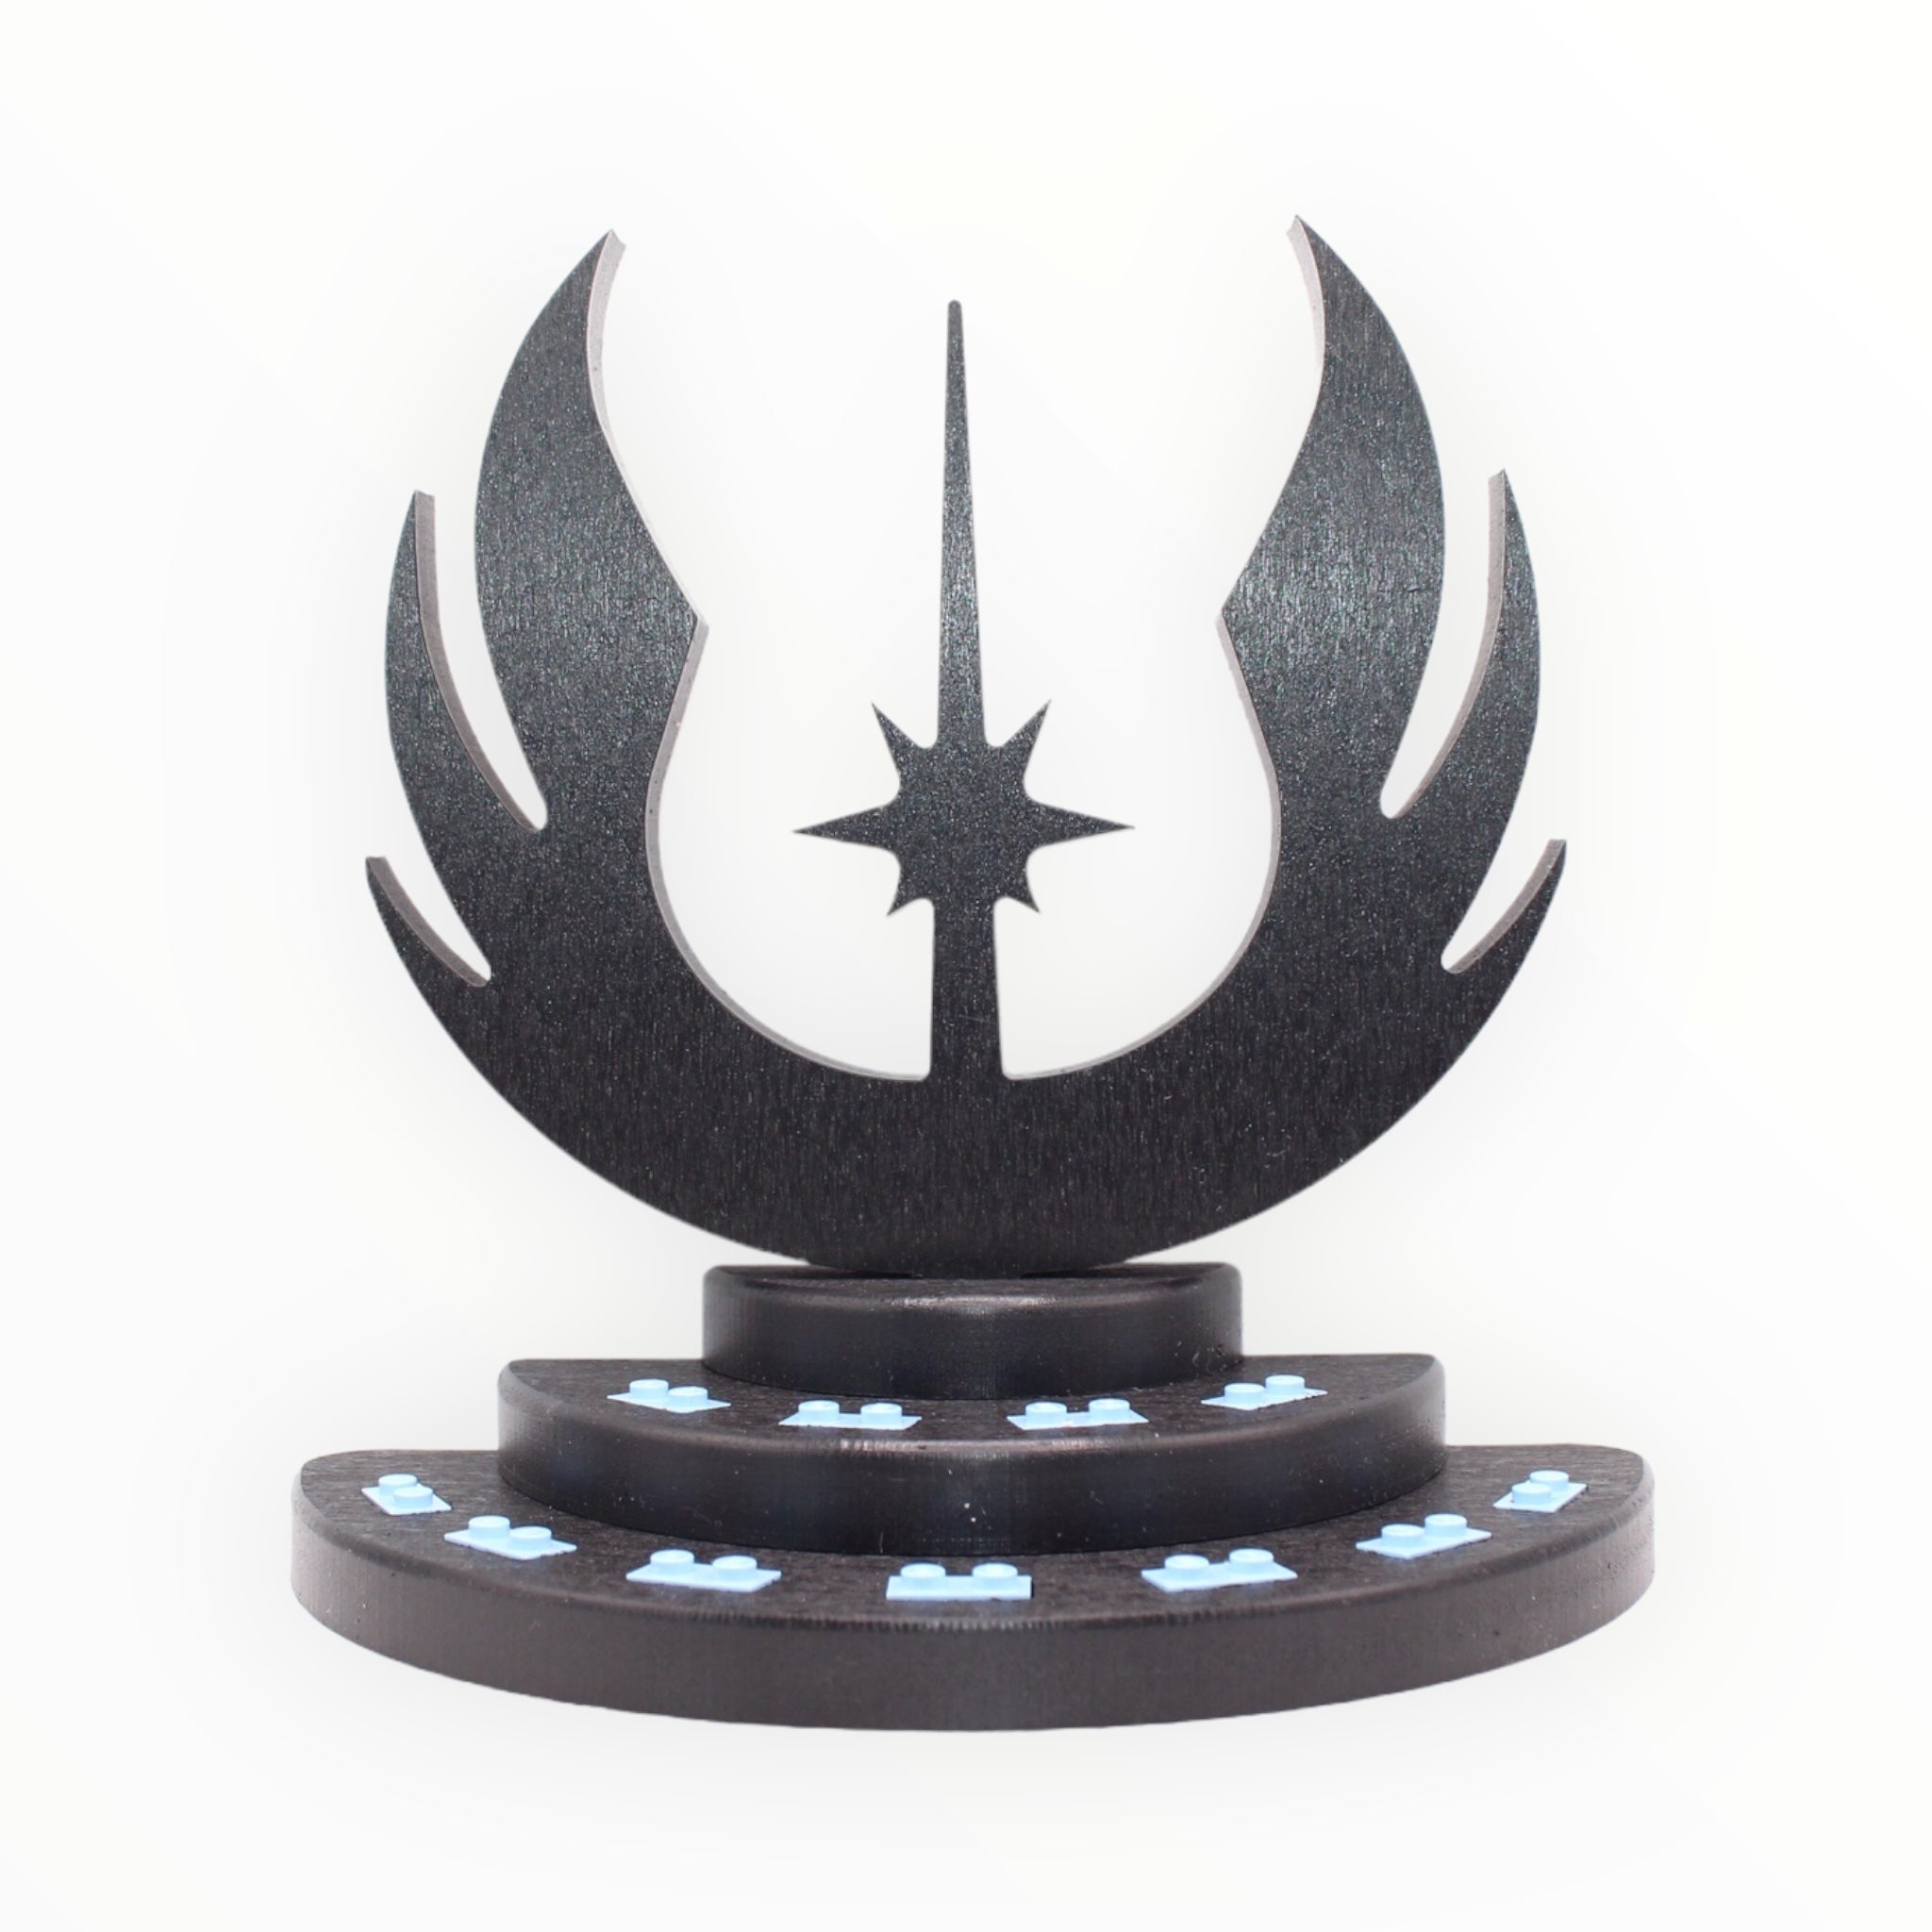 Star Wars Jedi-Themed Minifigure Display Stand (black and blue)